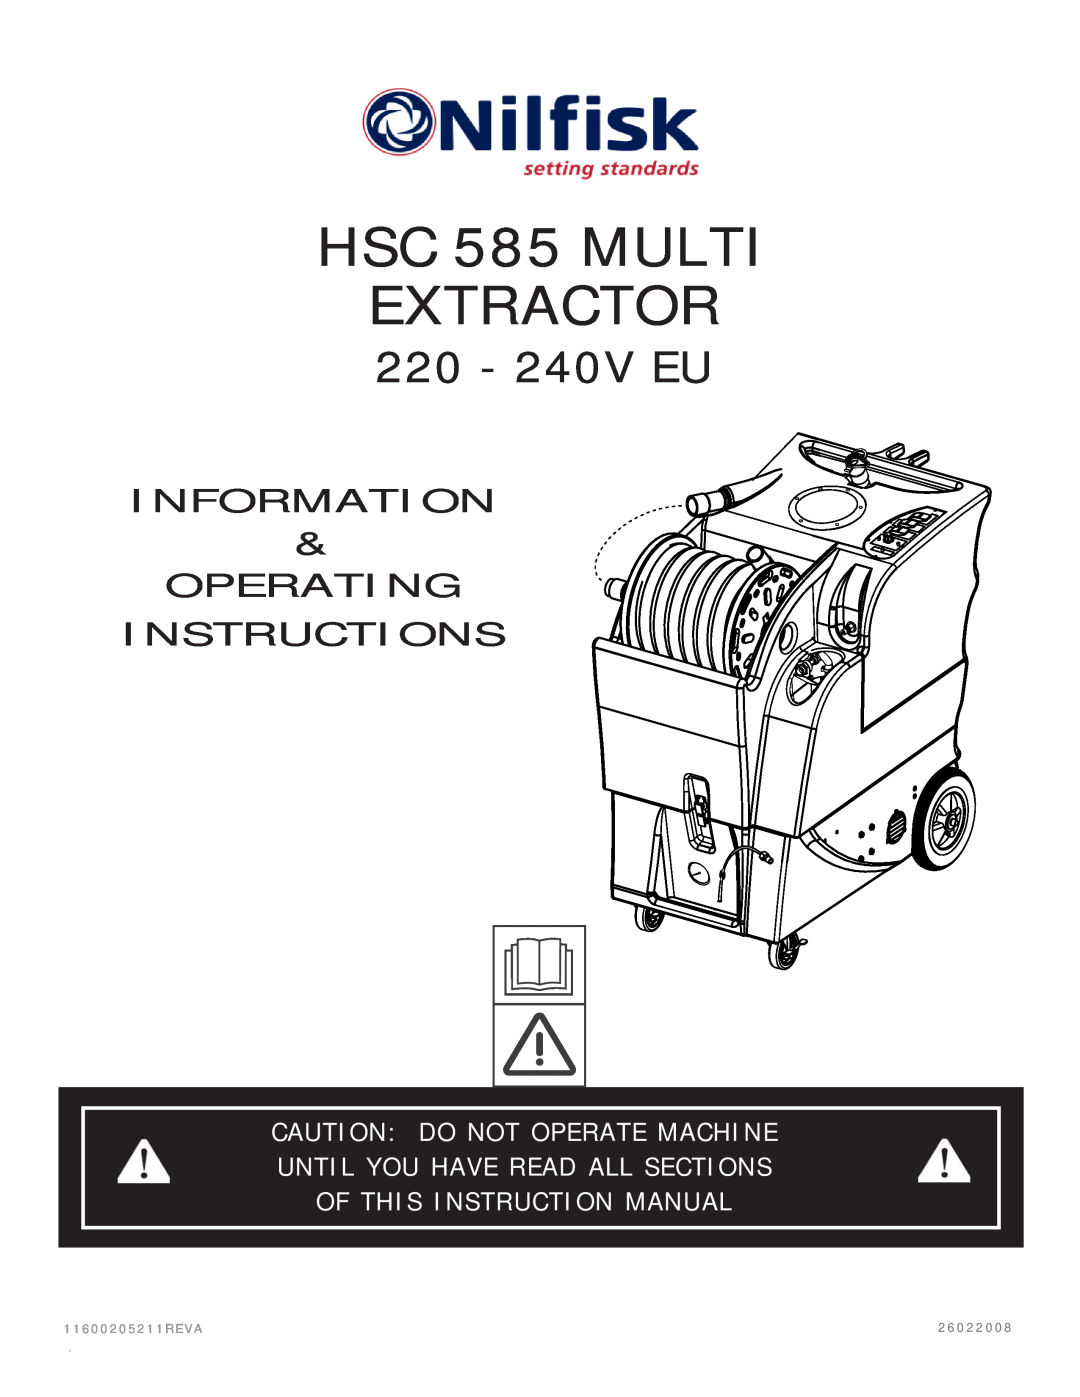 Nilfisk-Advance America operating instructions HSC 585 MULTI EXTRACTOR, Caution Do Not Operate Machine, 220 - 240V EU 